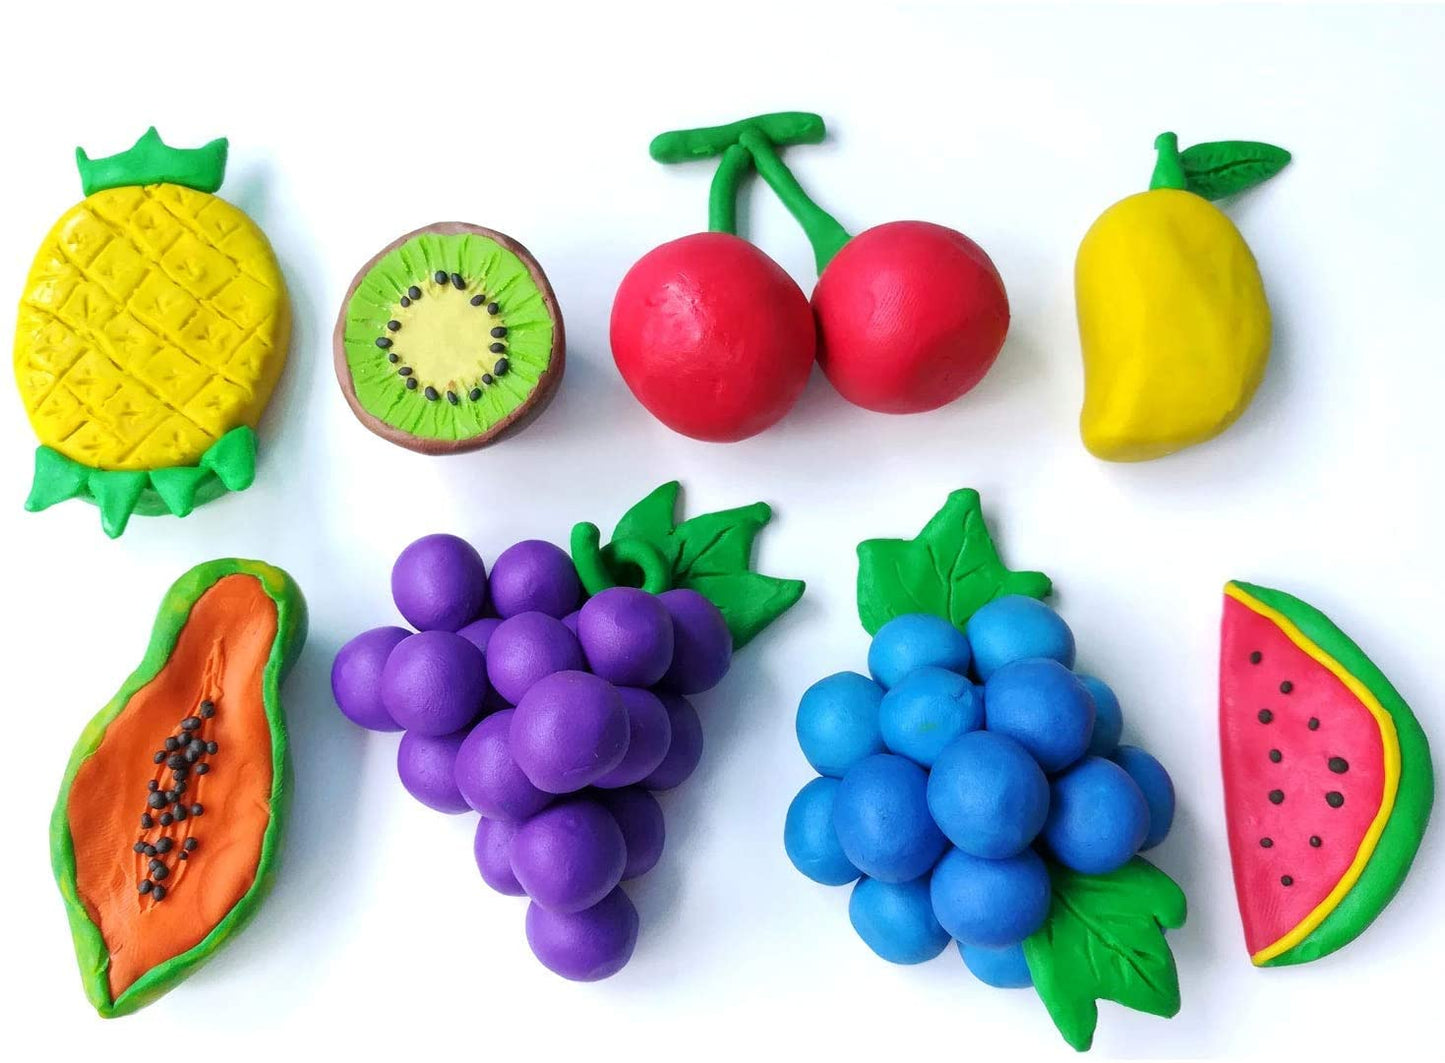 10 Colors Polymer Clay Make and Bake Set DIY Modeling Art and Craft Ma –  KundanTraders